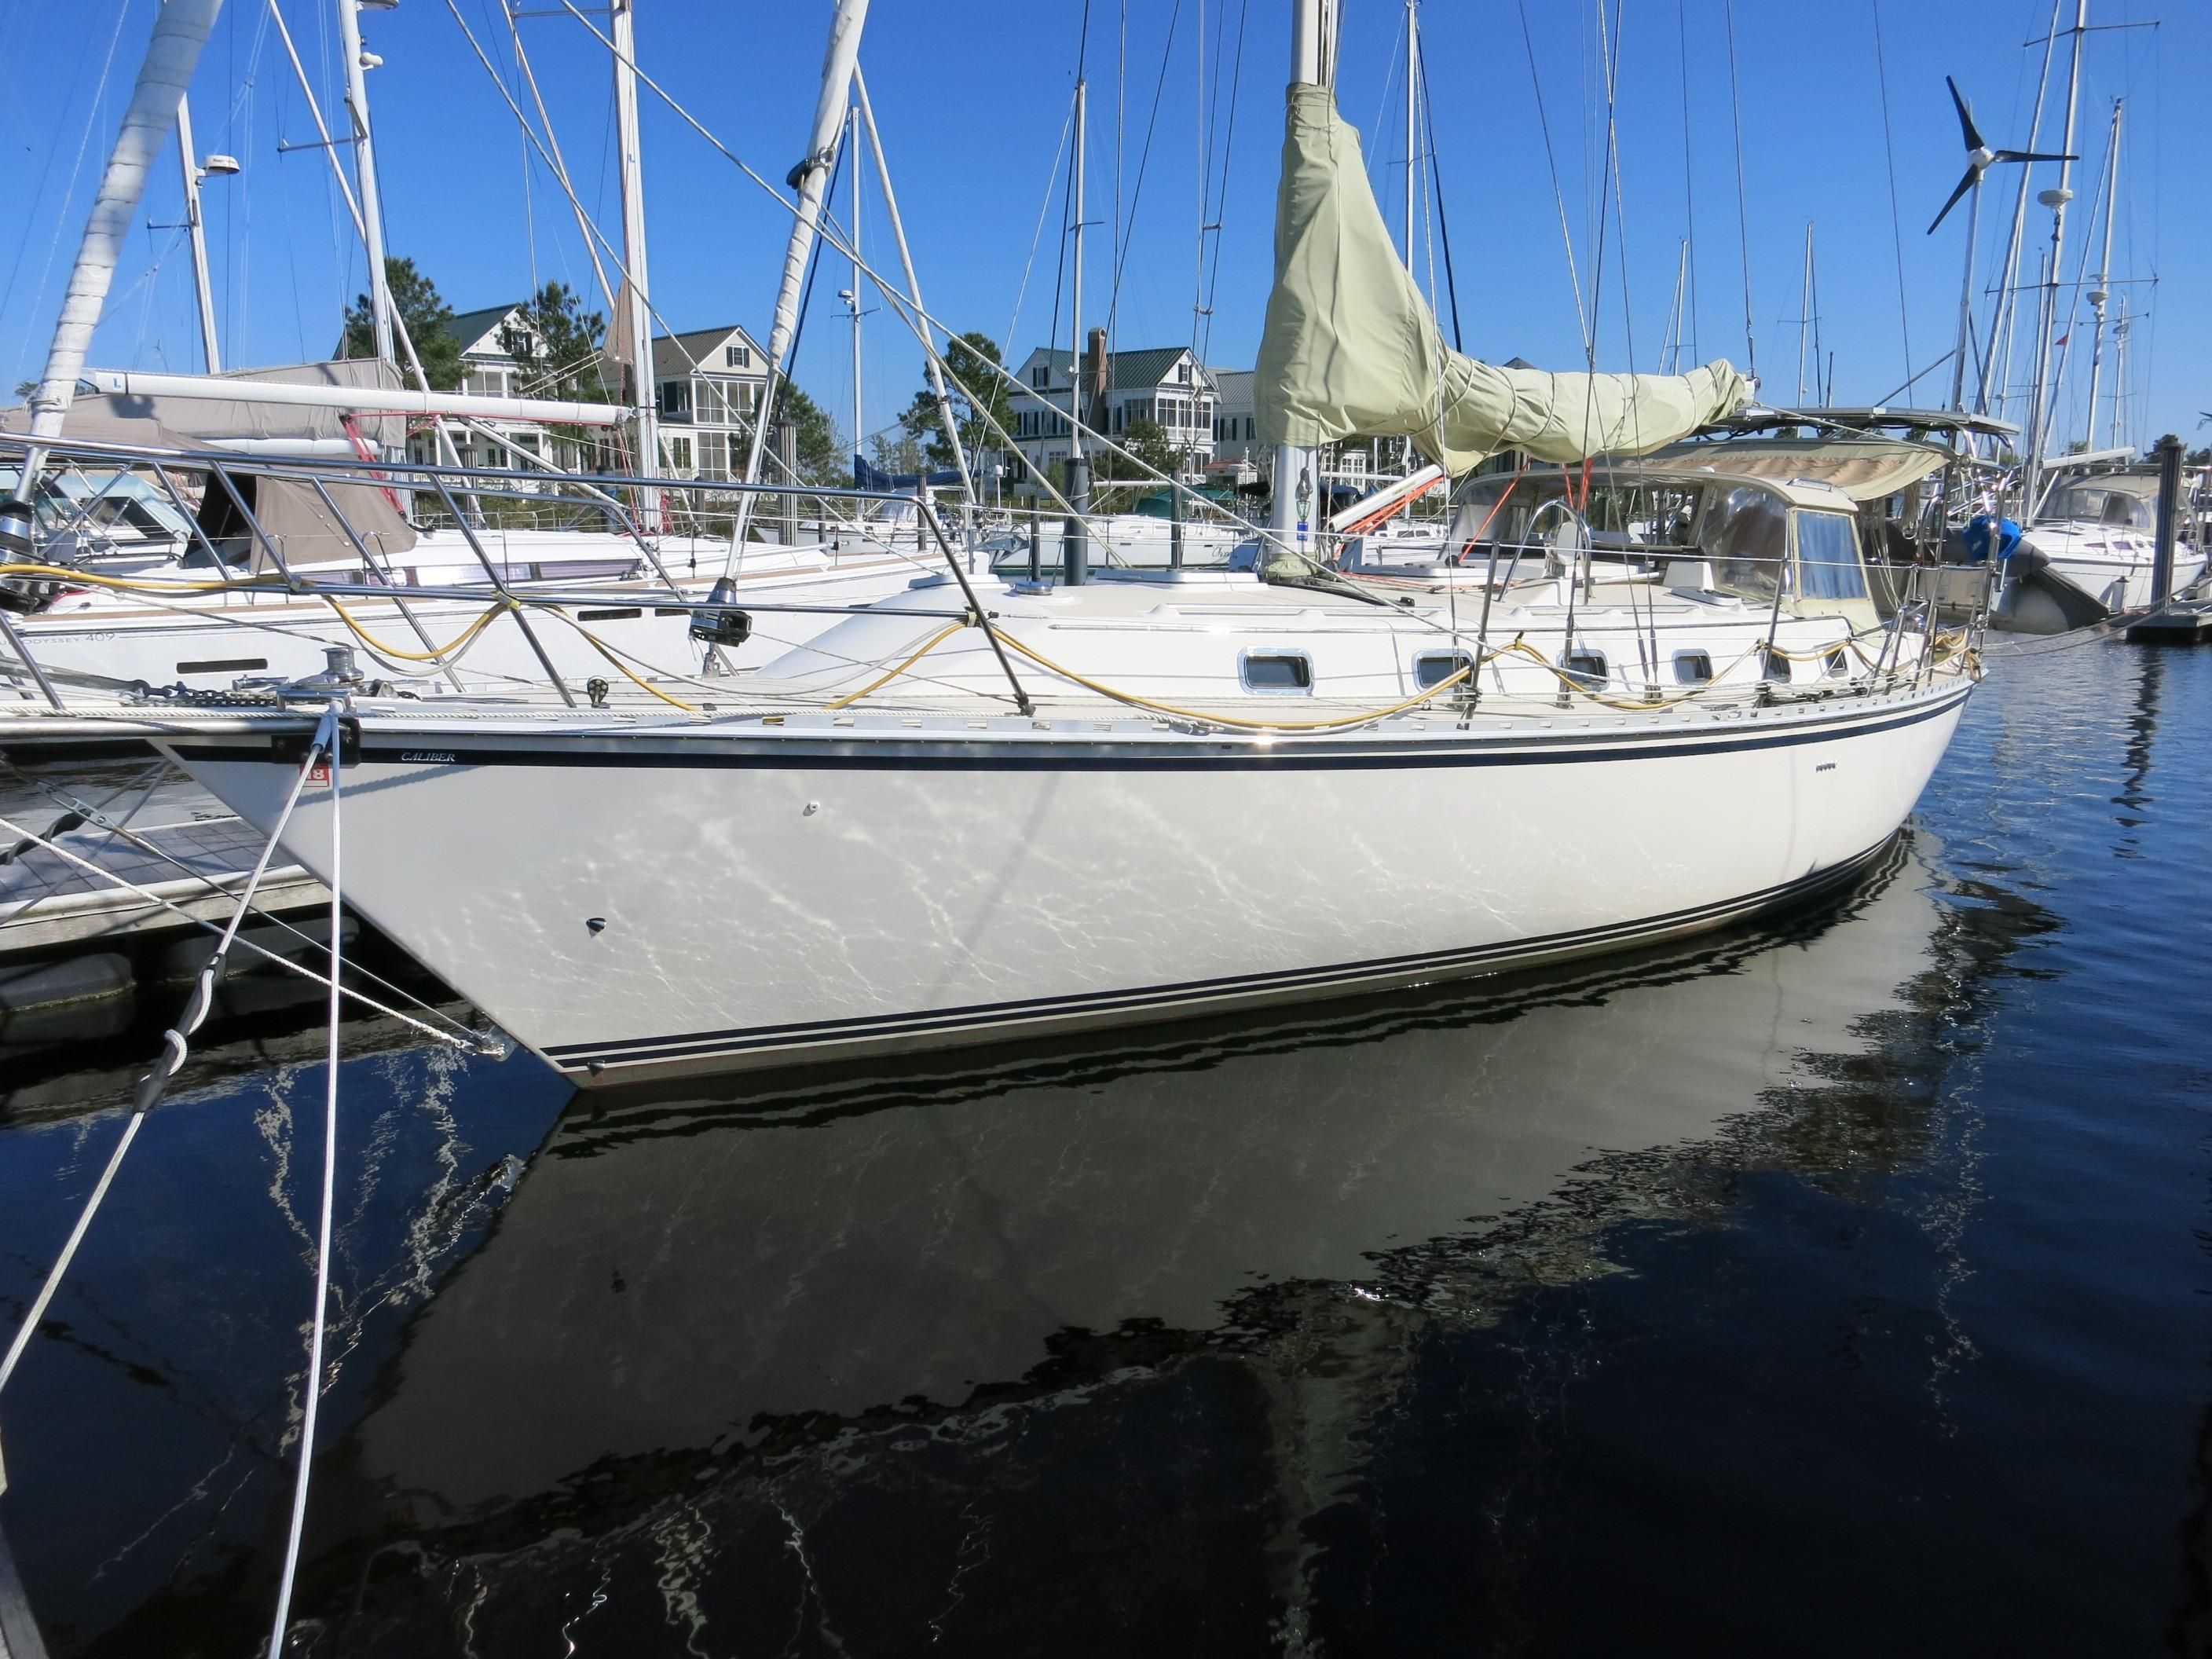 caliber sailboats for sale